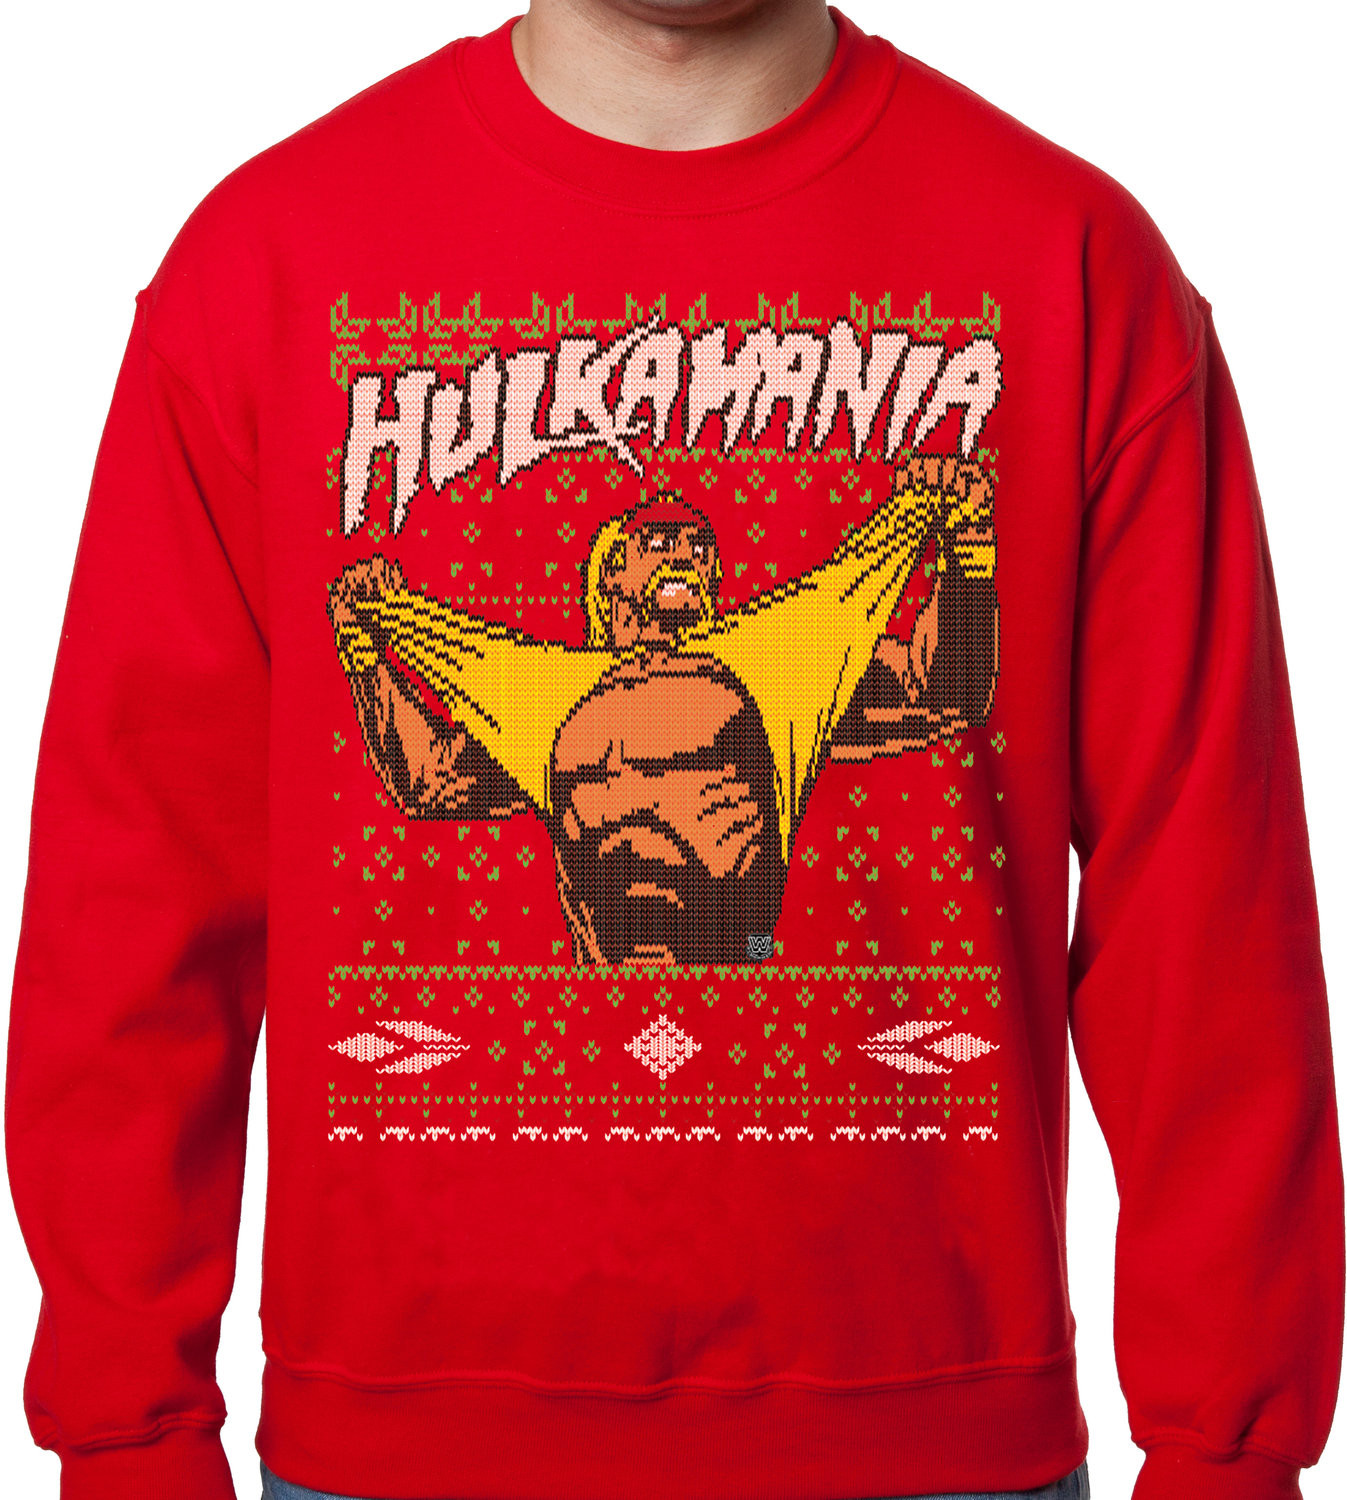 Hulk Hogan Ugly Christmas Sweater